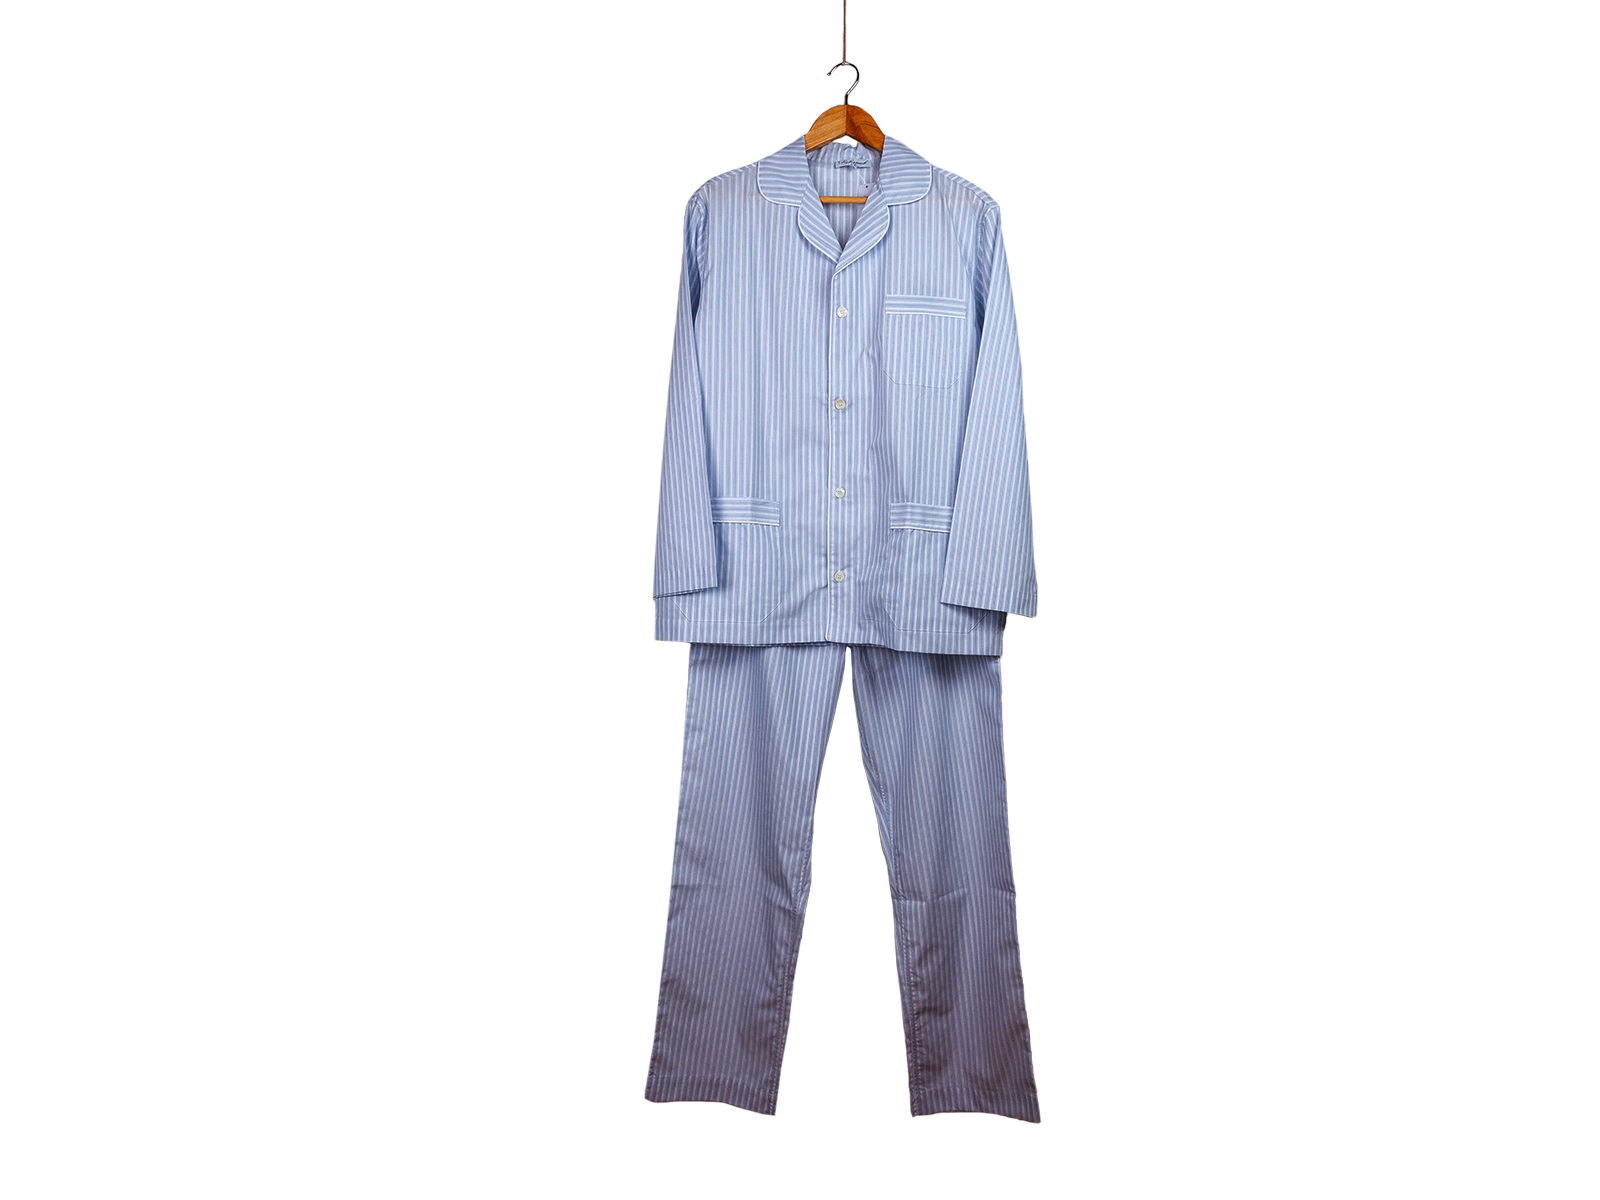 Siebaneck, i pigiami artigianali italiani: - uomo  - mod. 1 Uomo azzurro,grigio e bianco 